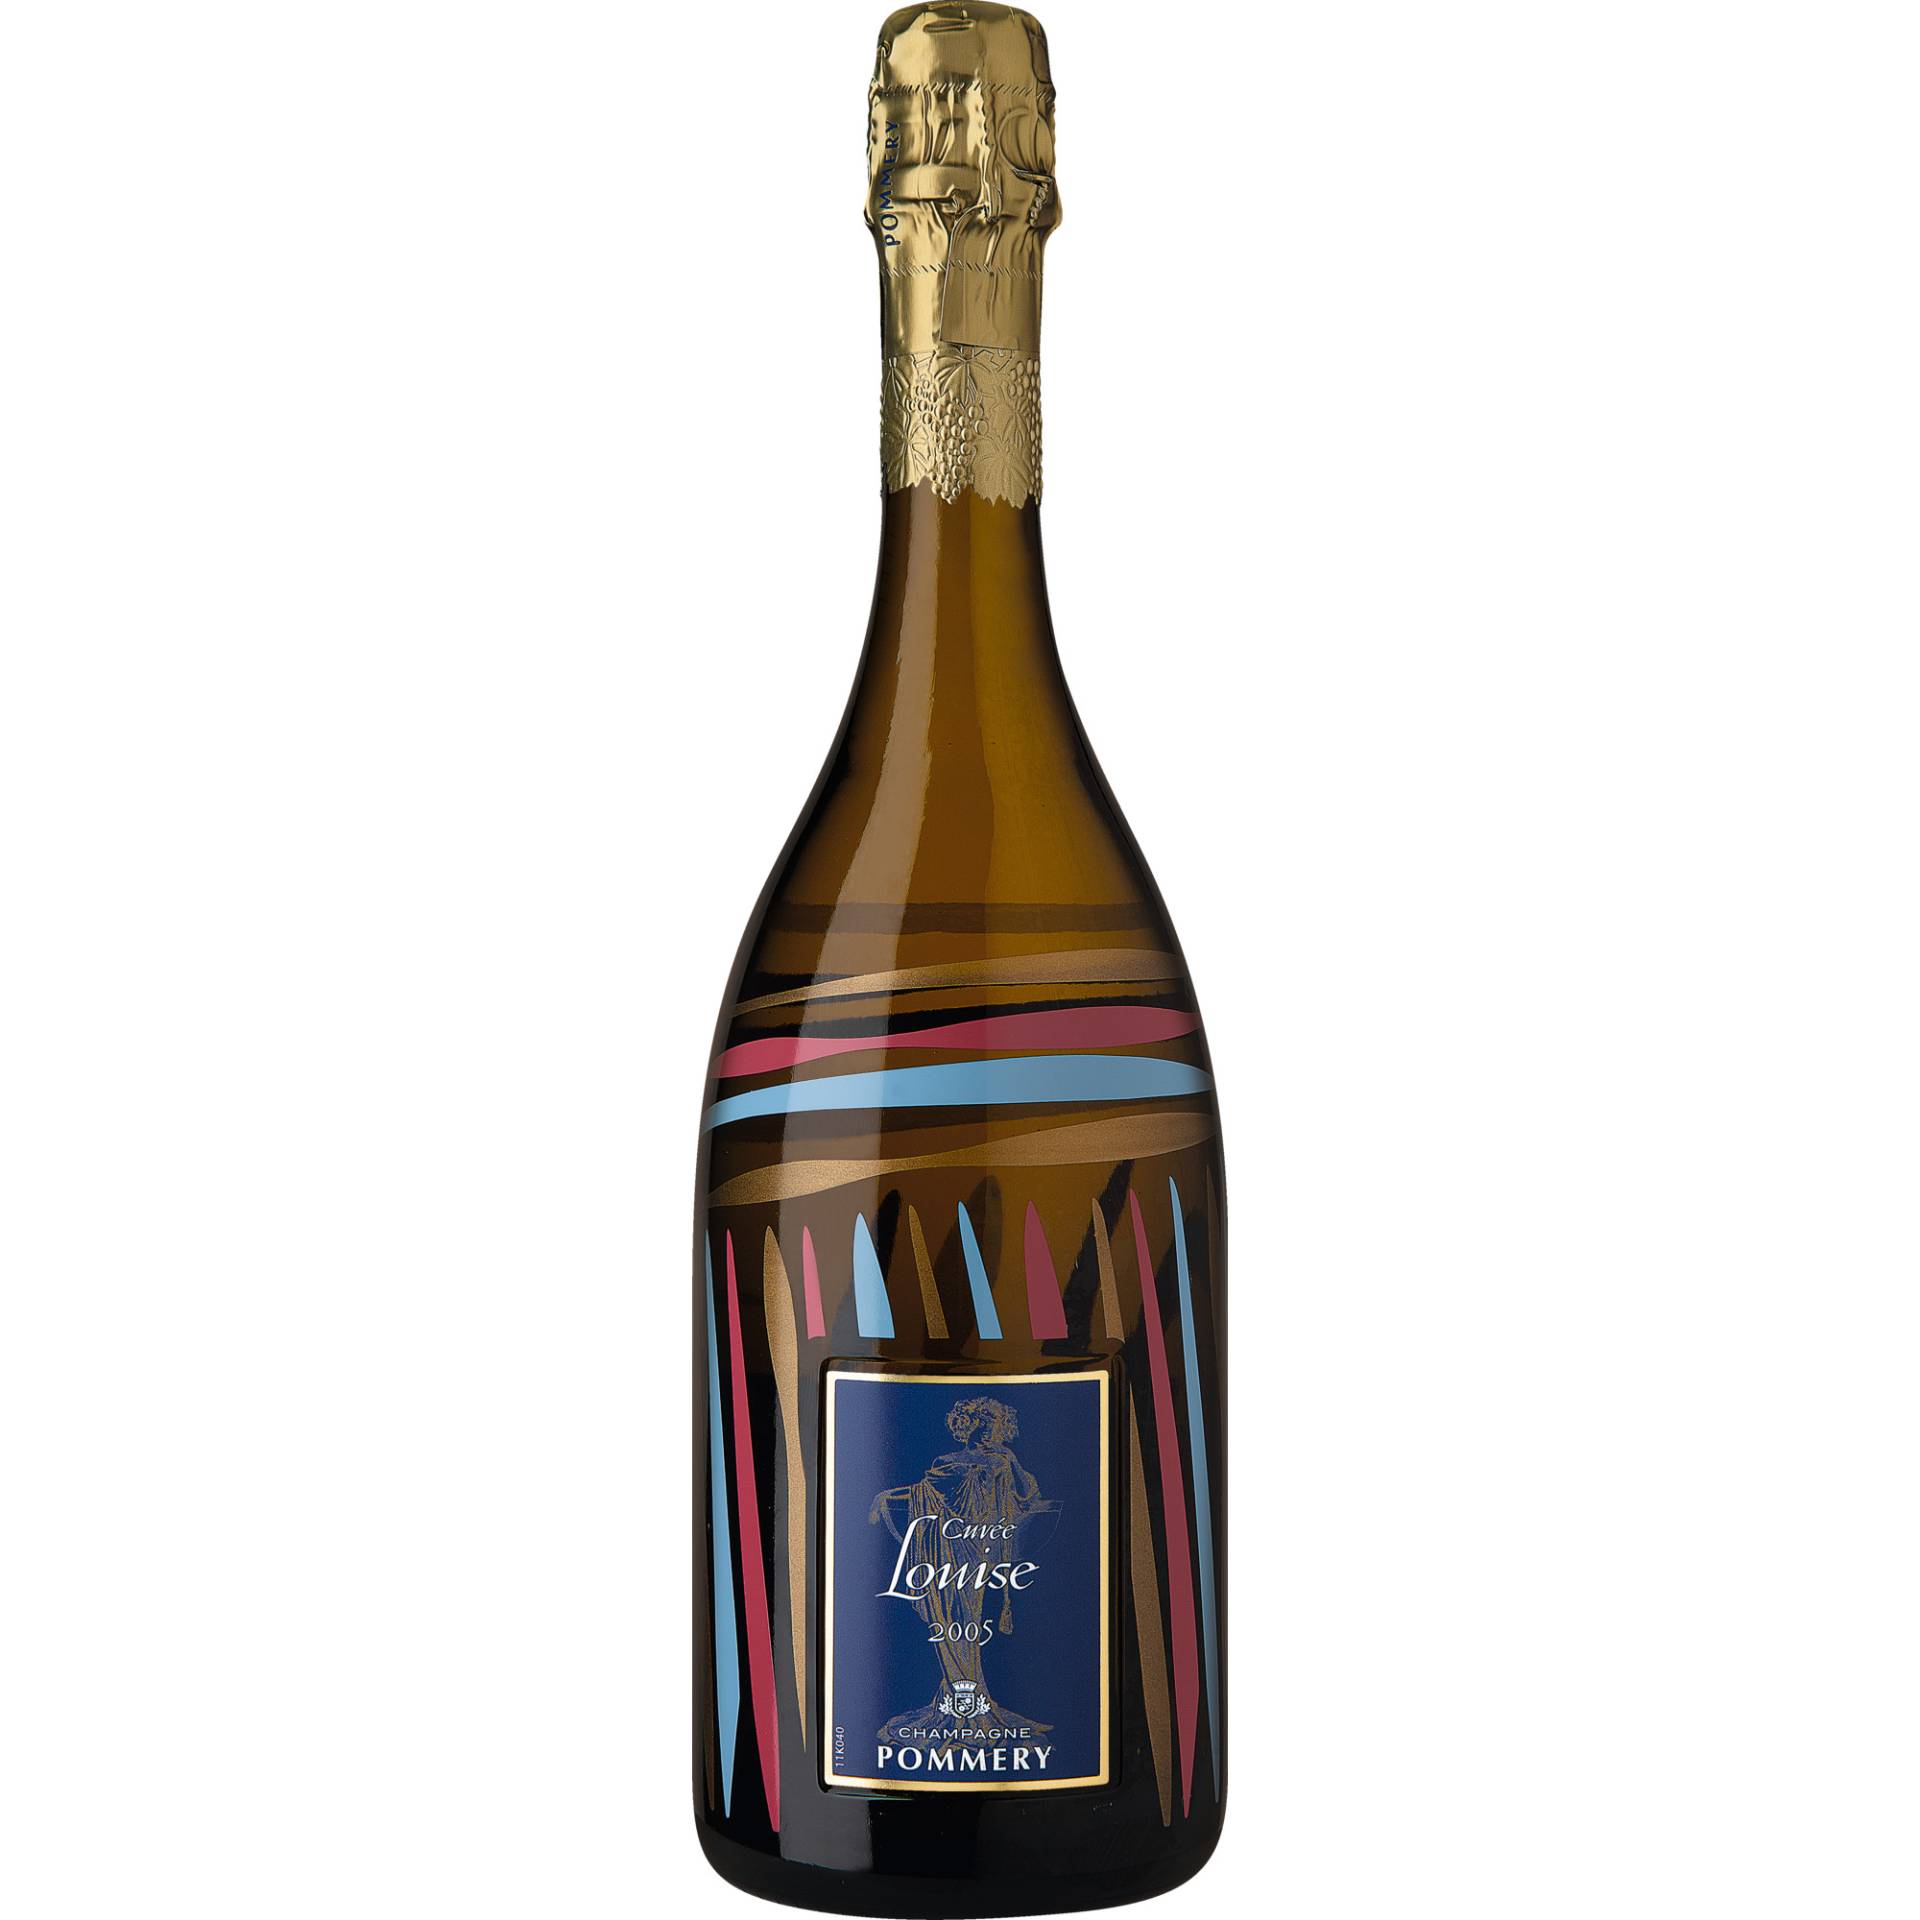 Champagne Cuvée Louise Pommery Limited Edition, Brut, Champagne AC, Geschenketui, Champagne, 2005, Schaumwein von Vranken-Pommery Monopole / 5 place du Général Gouraud - BP 1049 - 51689 Reims - France